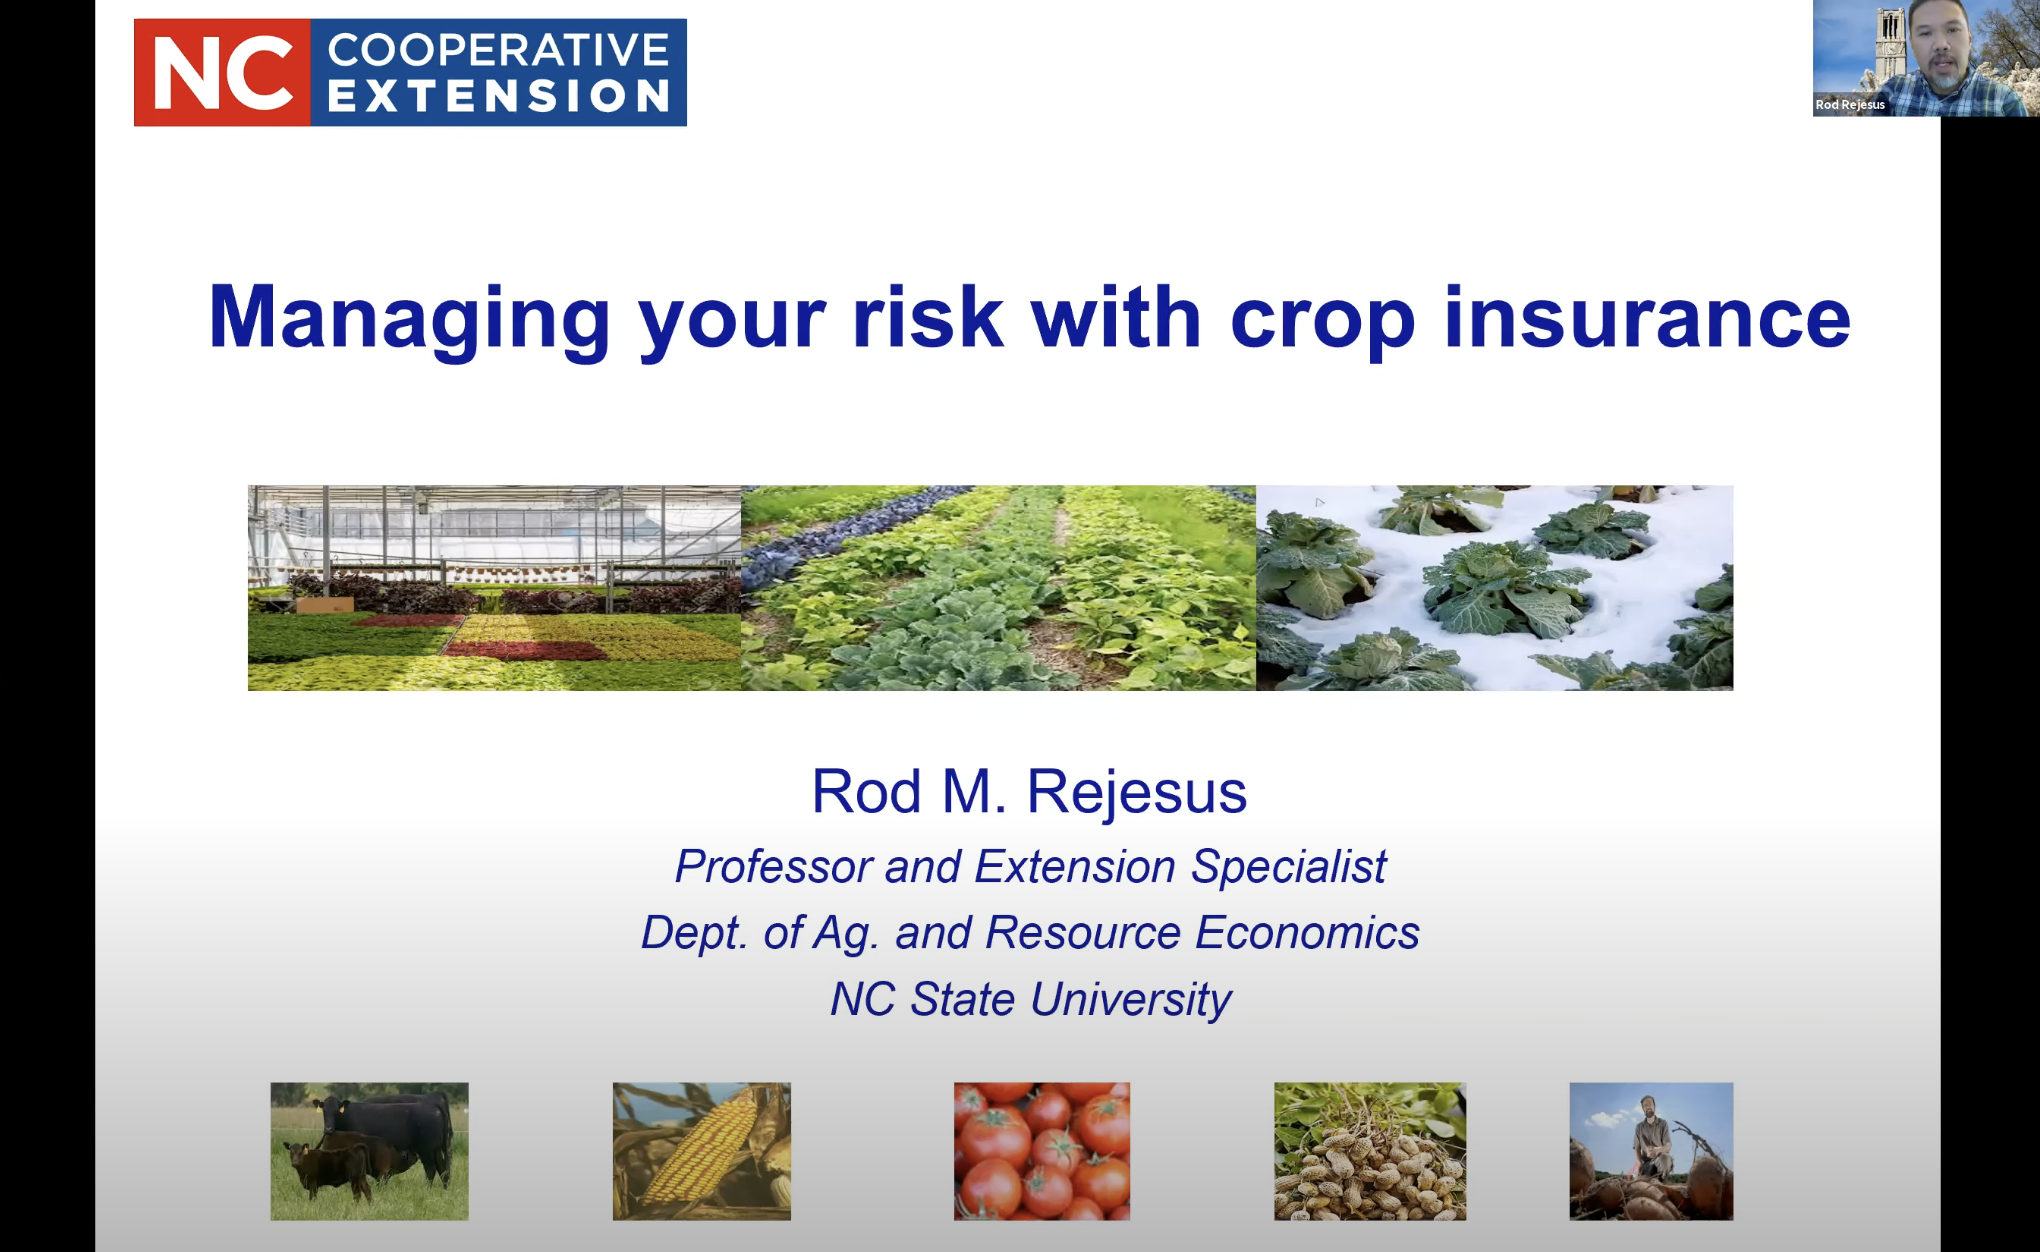 crop insurance youtube video screenshot